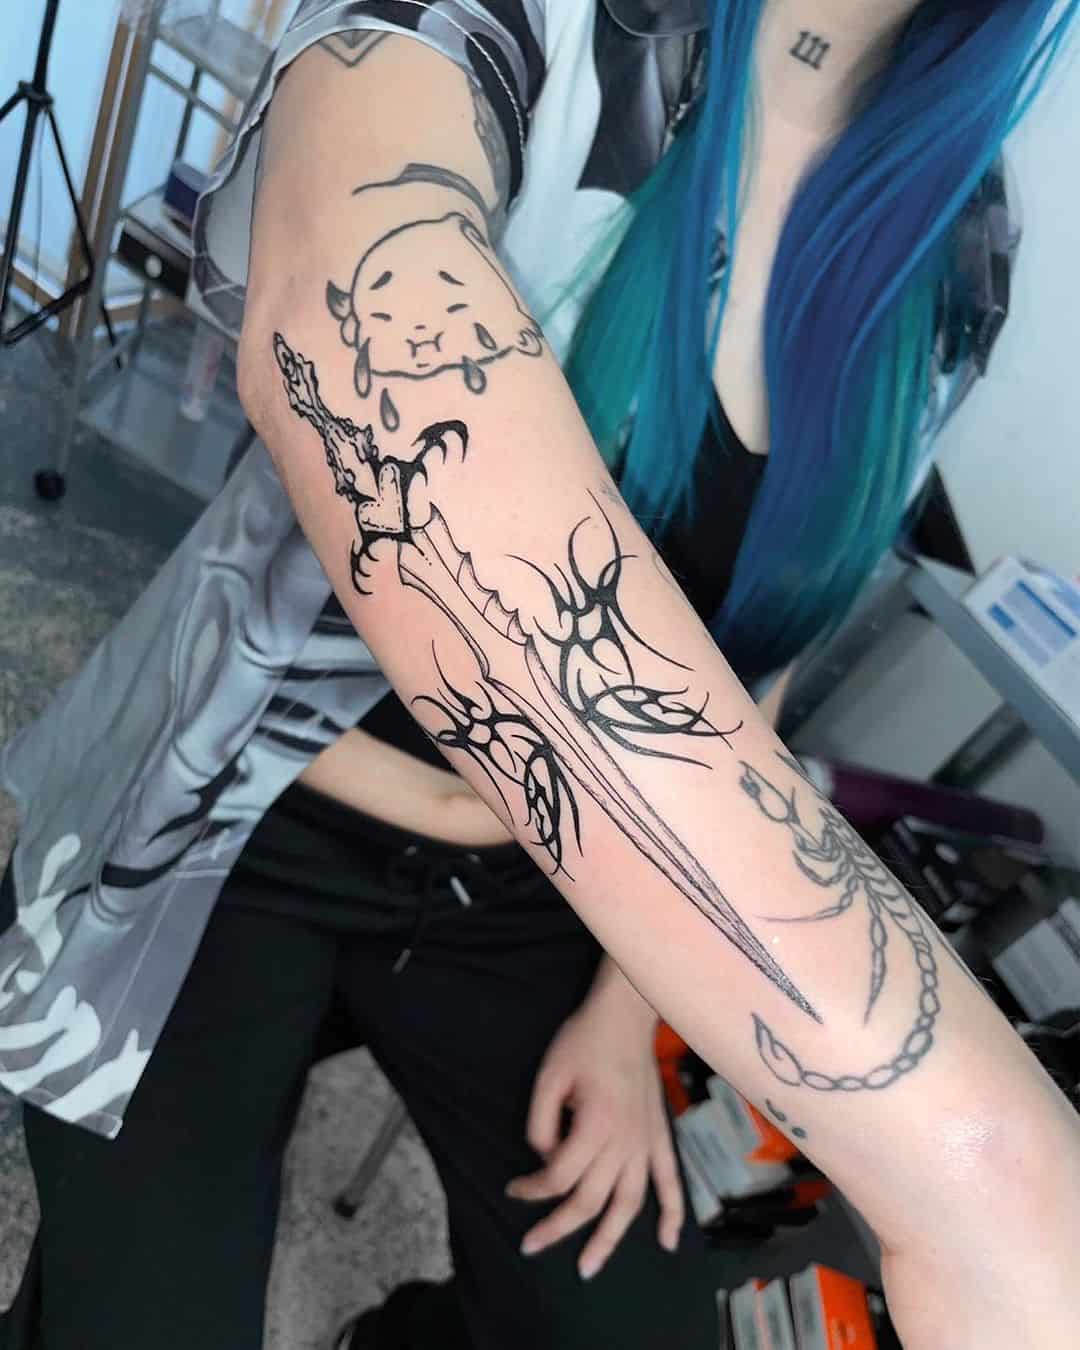 Arm tattoo desin by armin.stanu